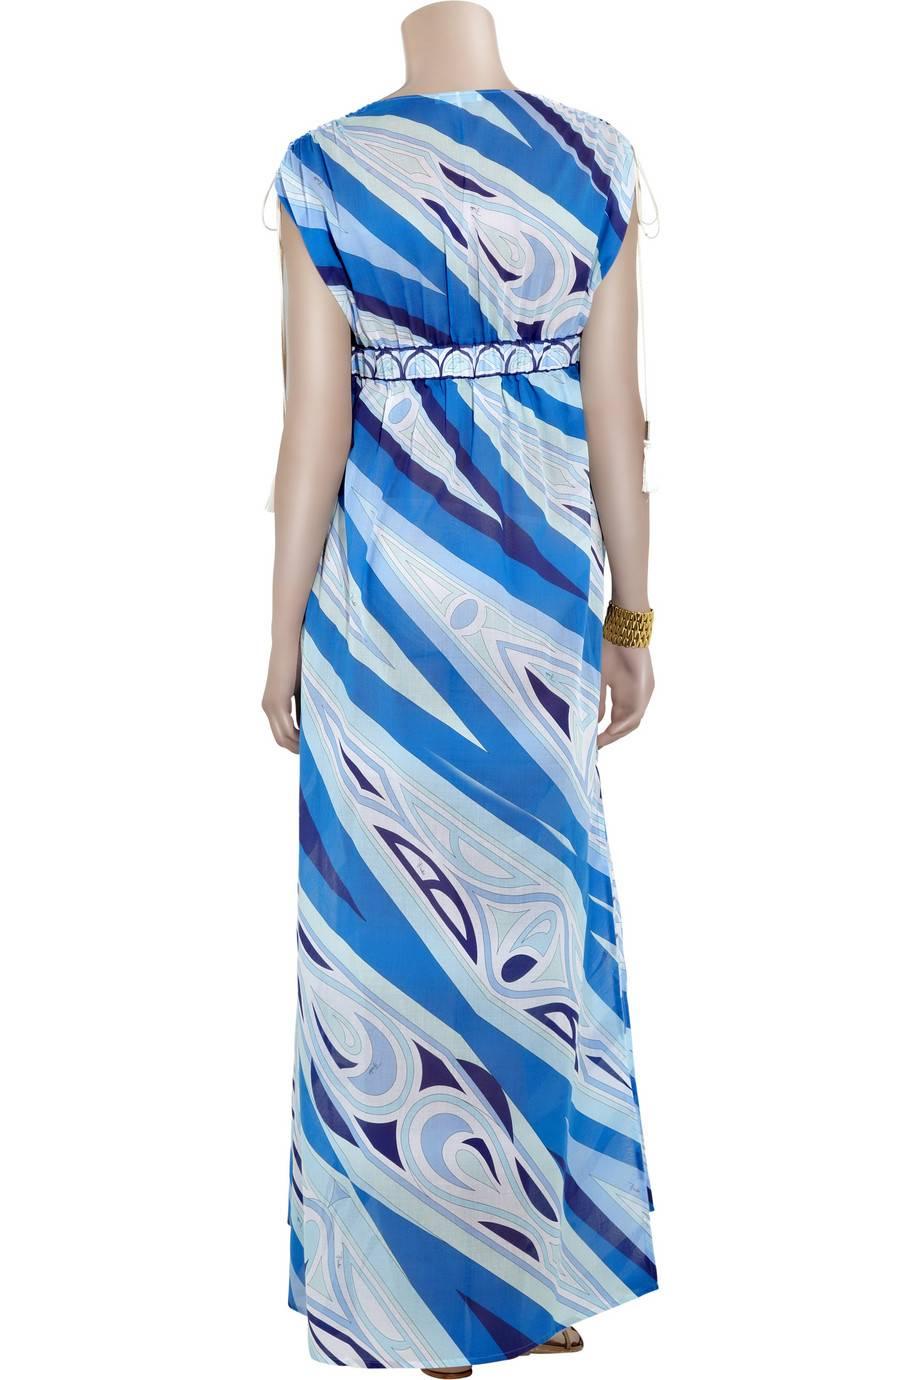 Blue Emilio Pucci Signature Print Tassel Dress Gown